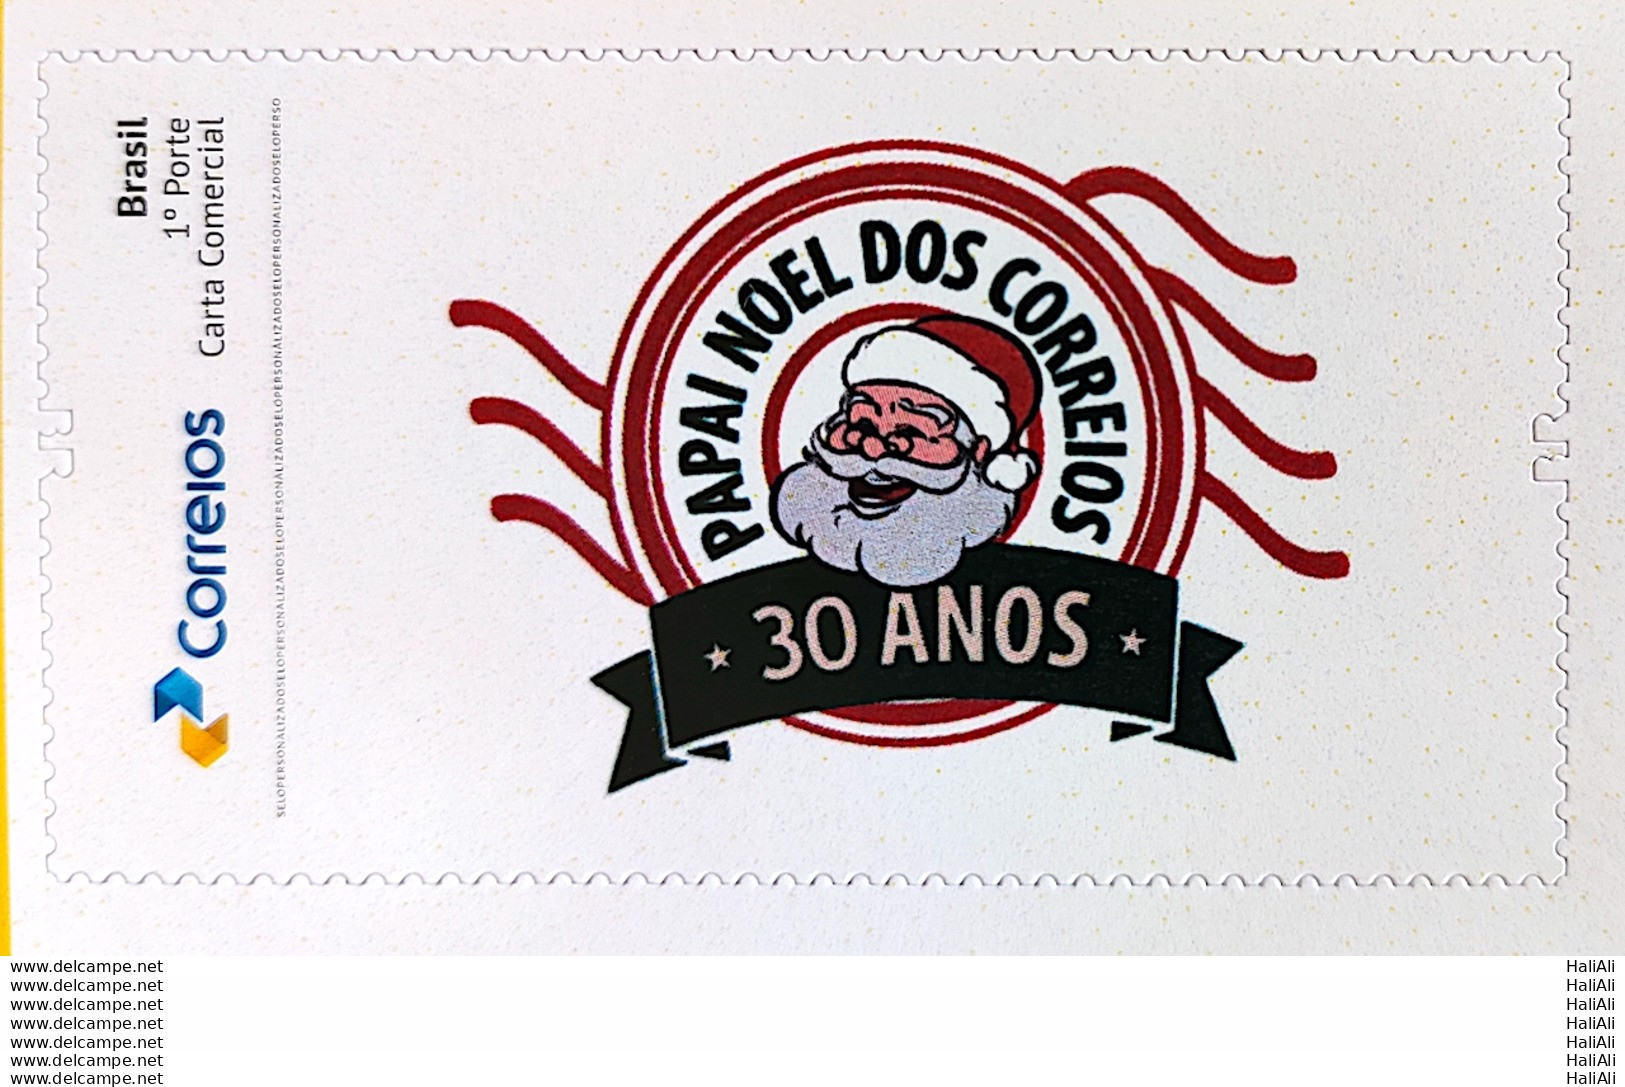 PB 131 Brazil Personalized Stamp Santa Claus Christmas Postal Service Social Action 2019 - Personnalisés